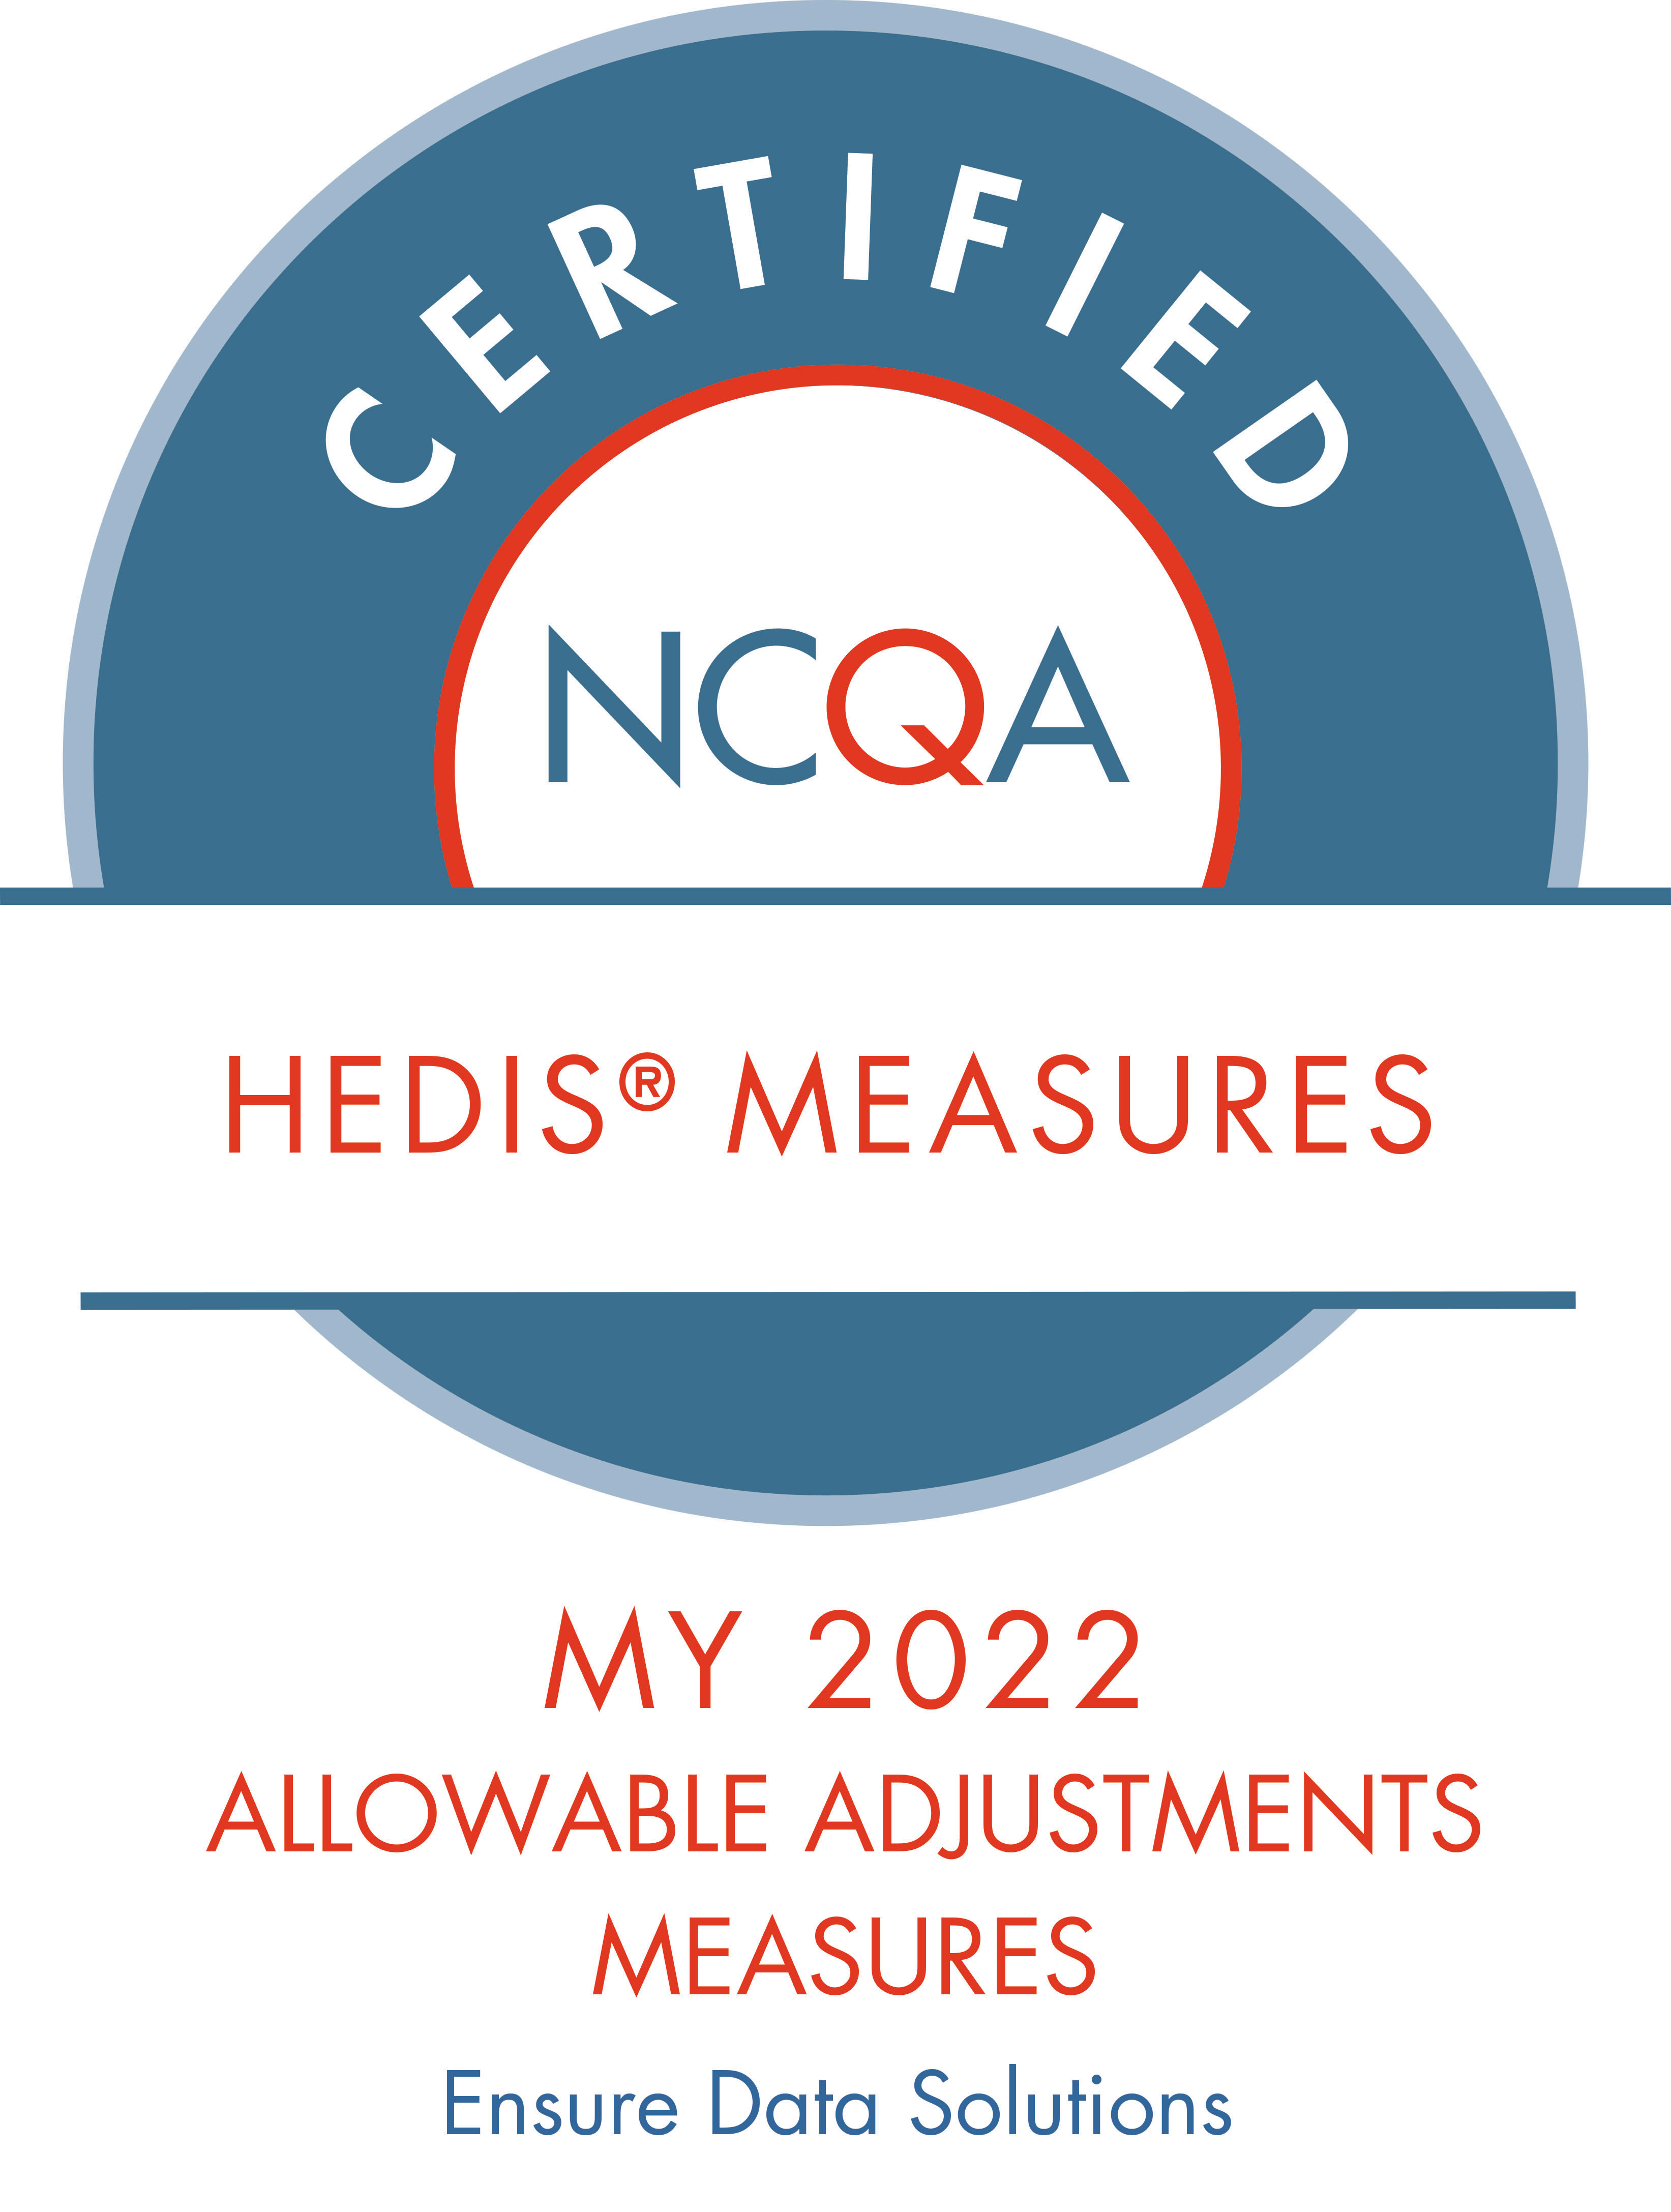 Certified HEDIS Measures